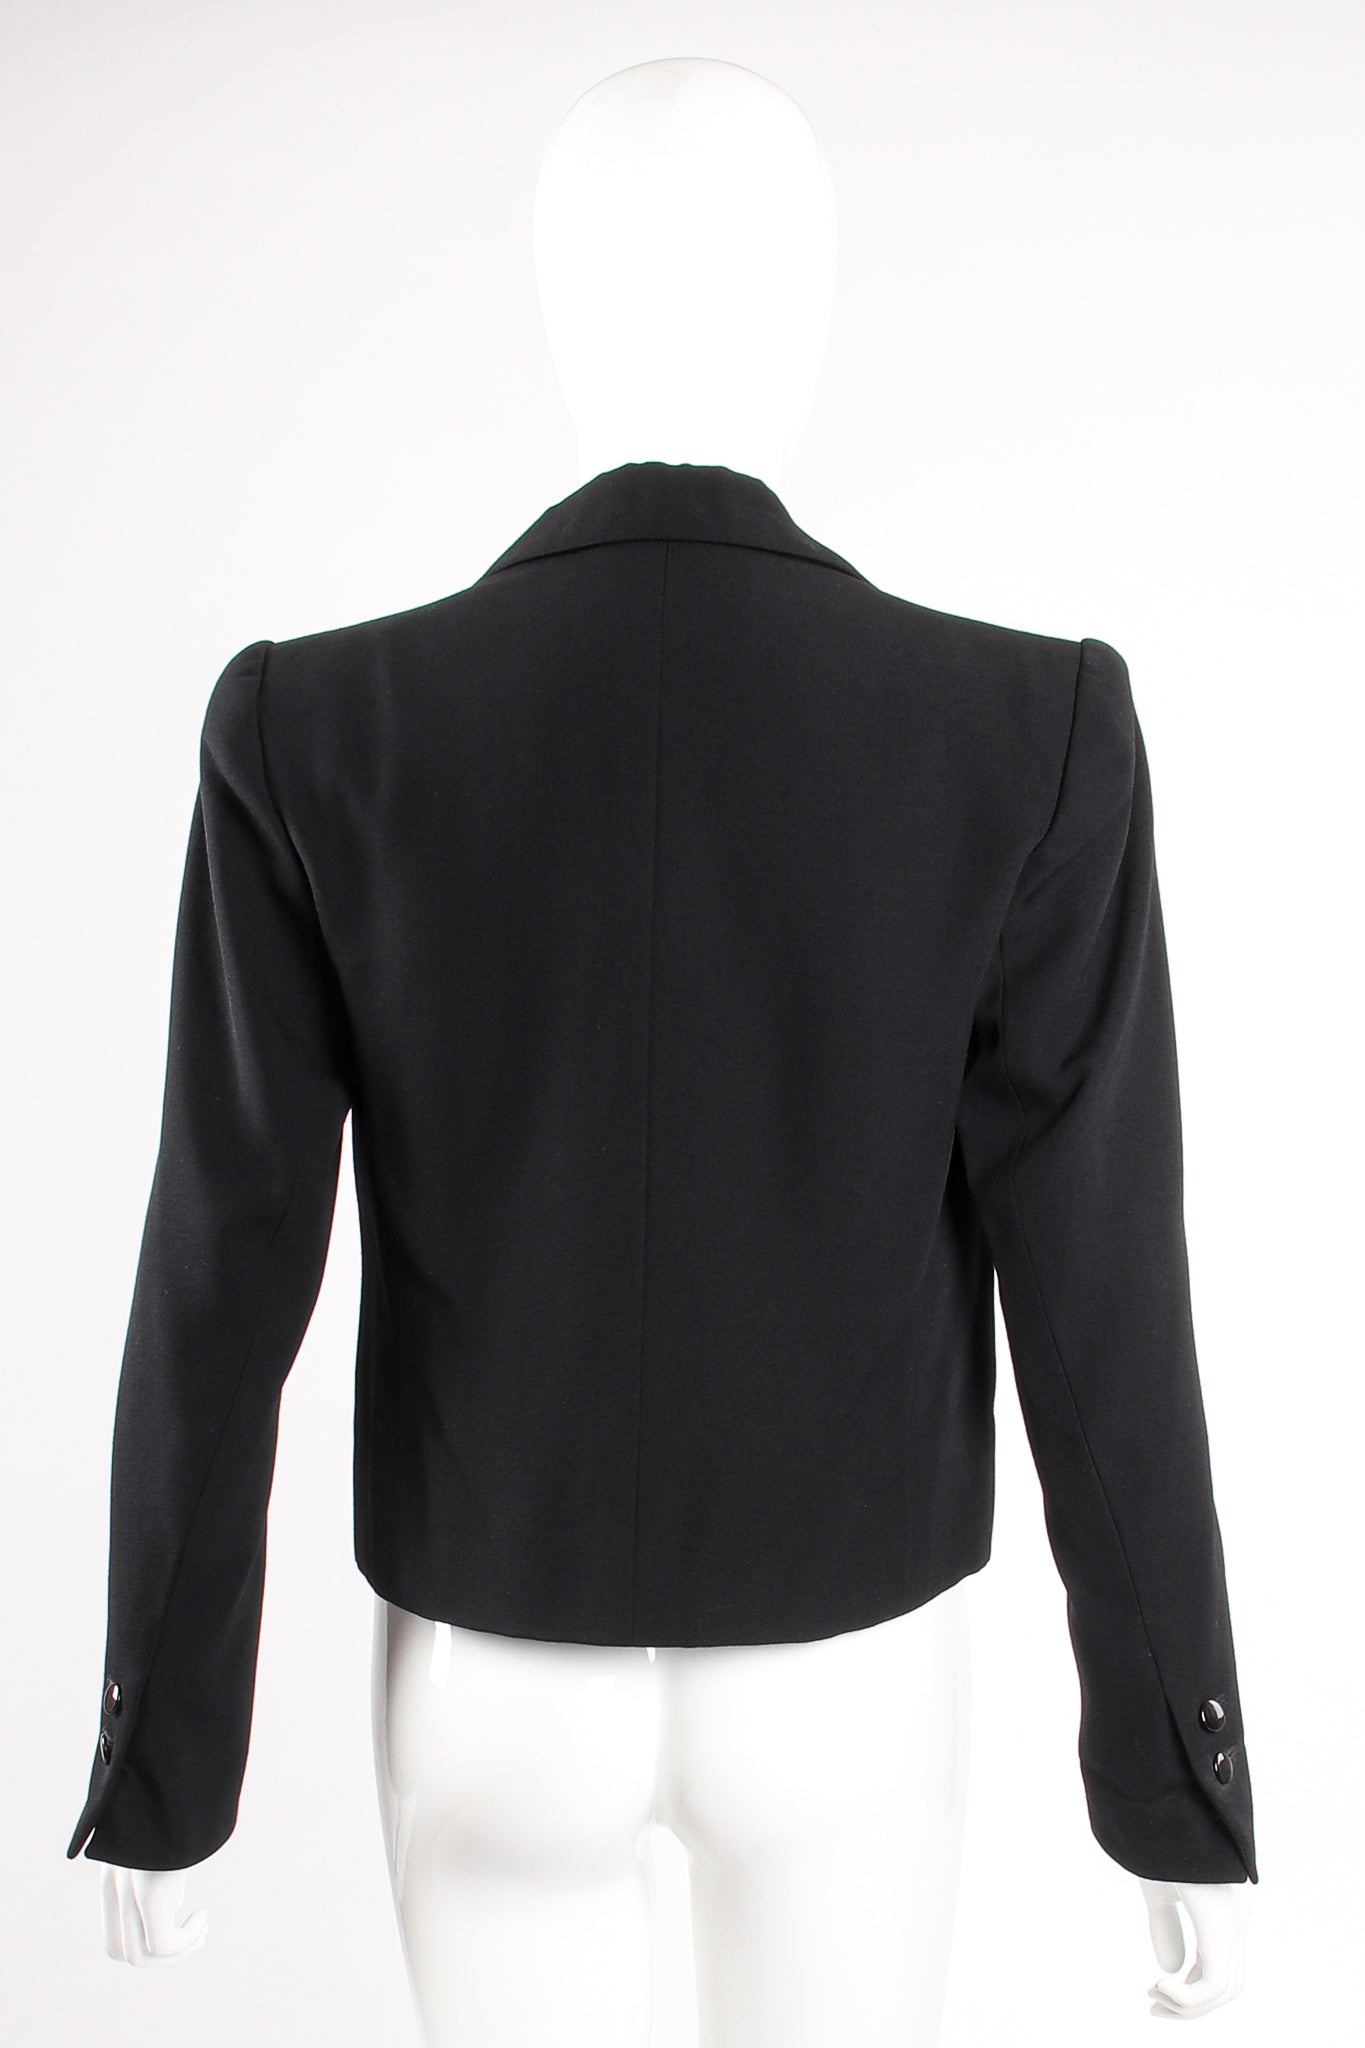 Vintage Yves Saint Laurent YSL Cropped Tuxedo Jacket on Mannequin back at Recess Los Angeles